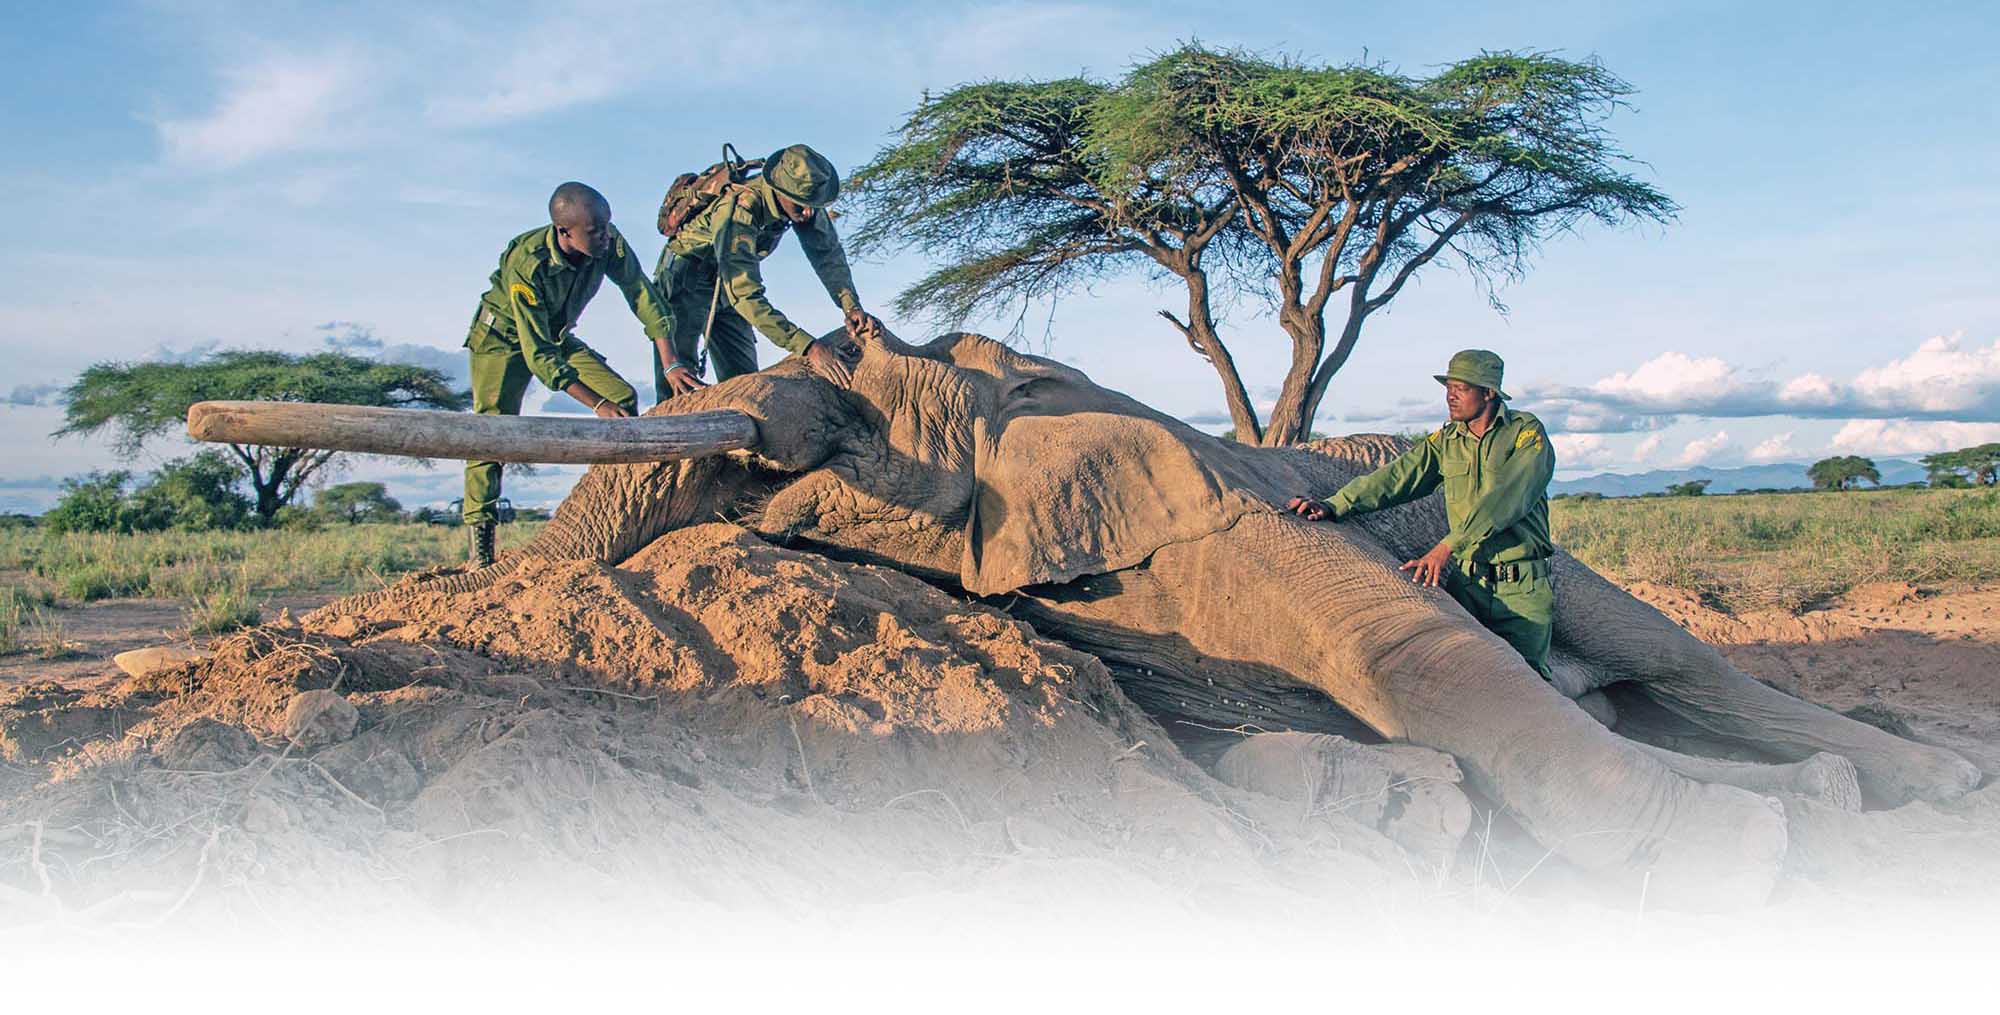 Rangers dead elephant